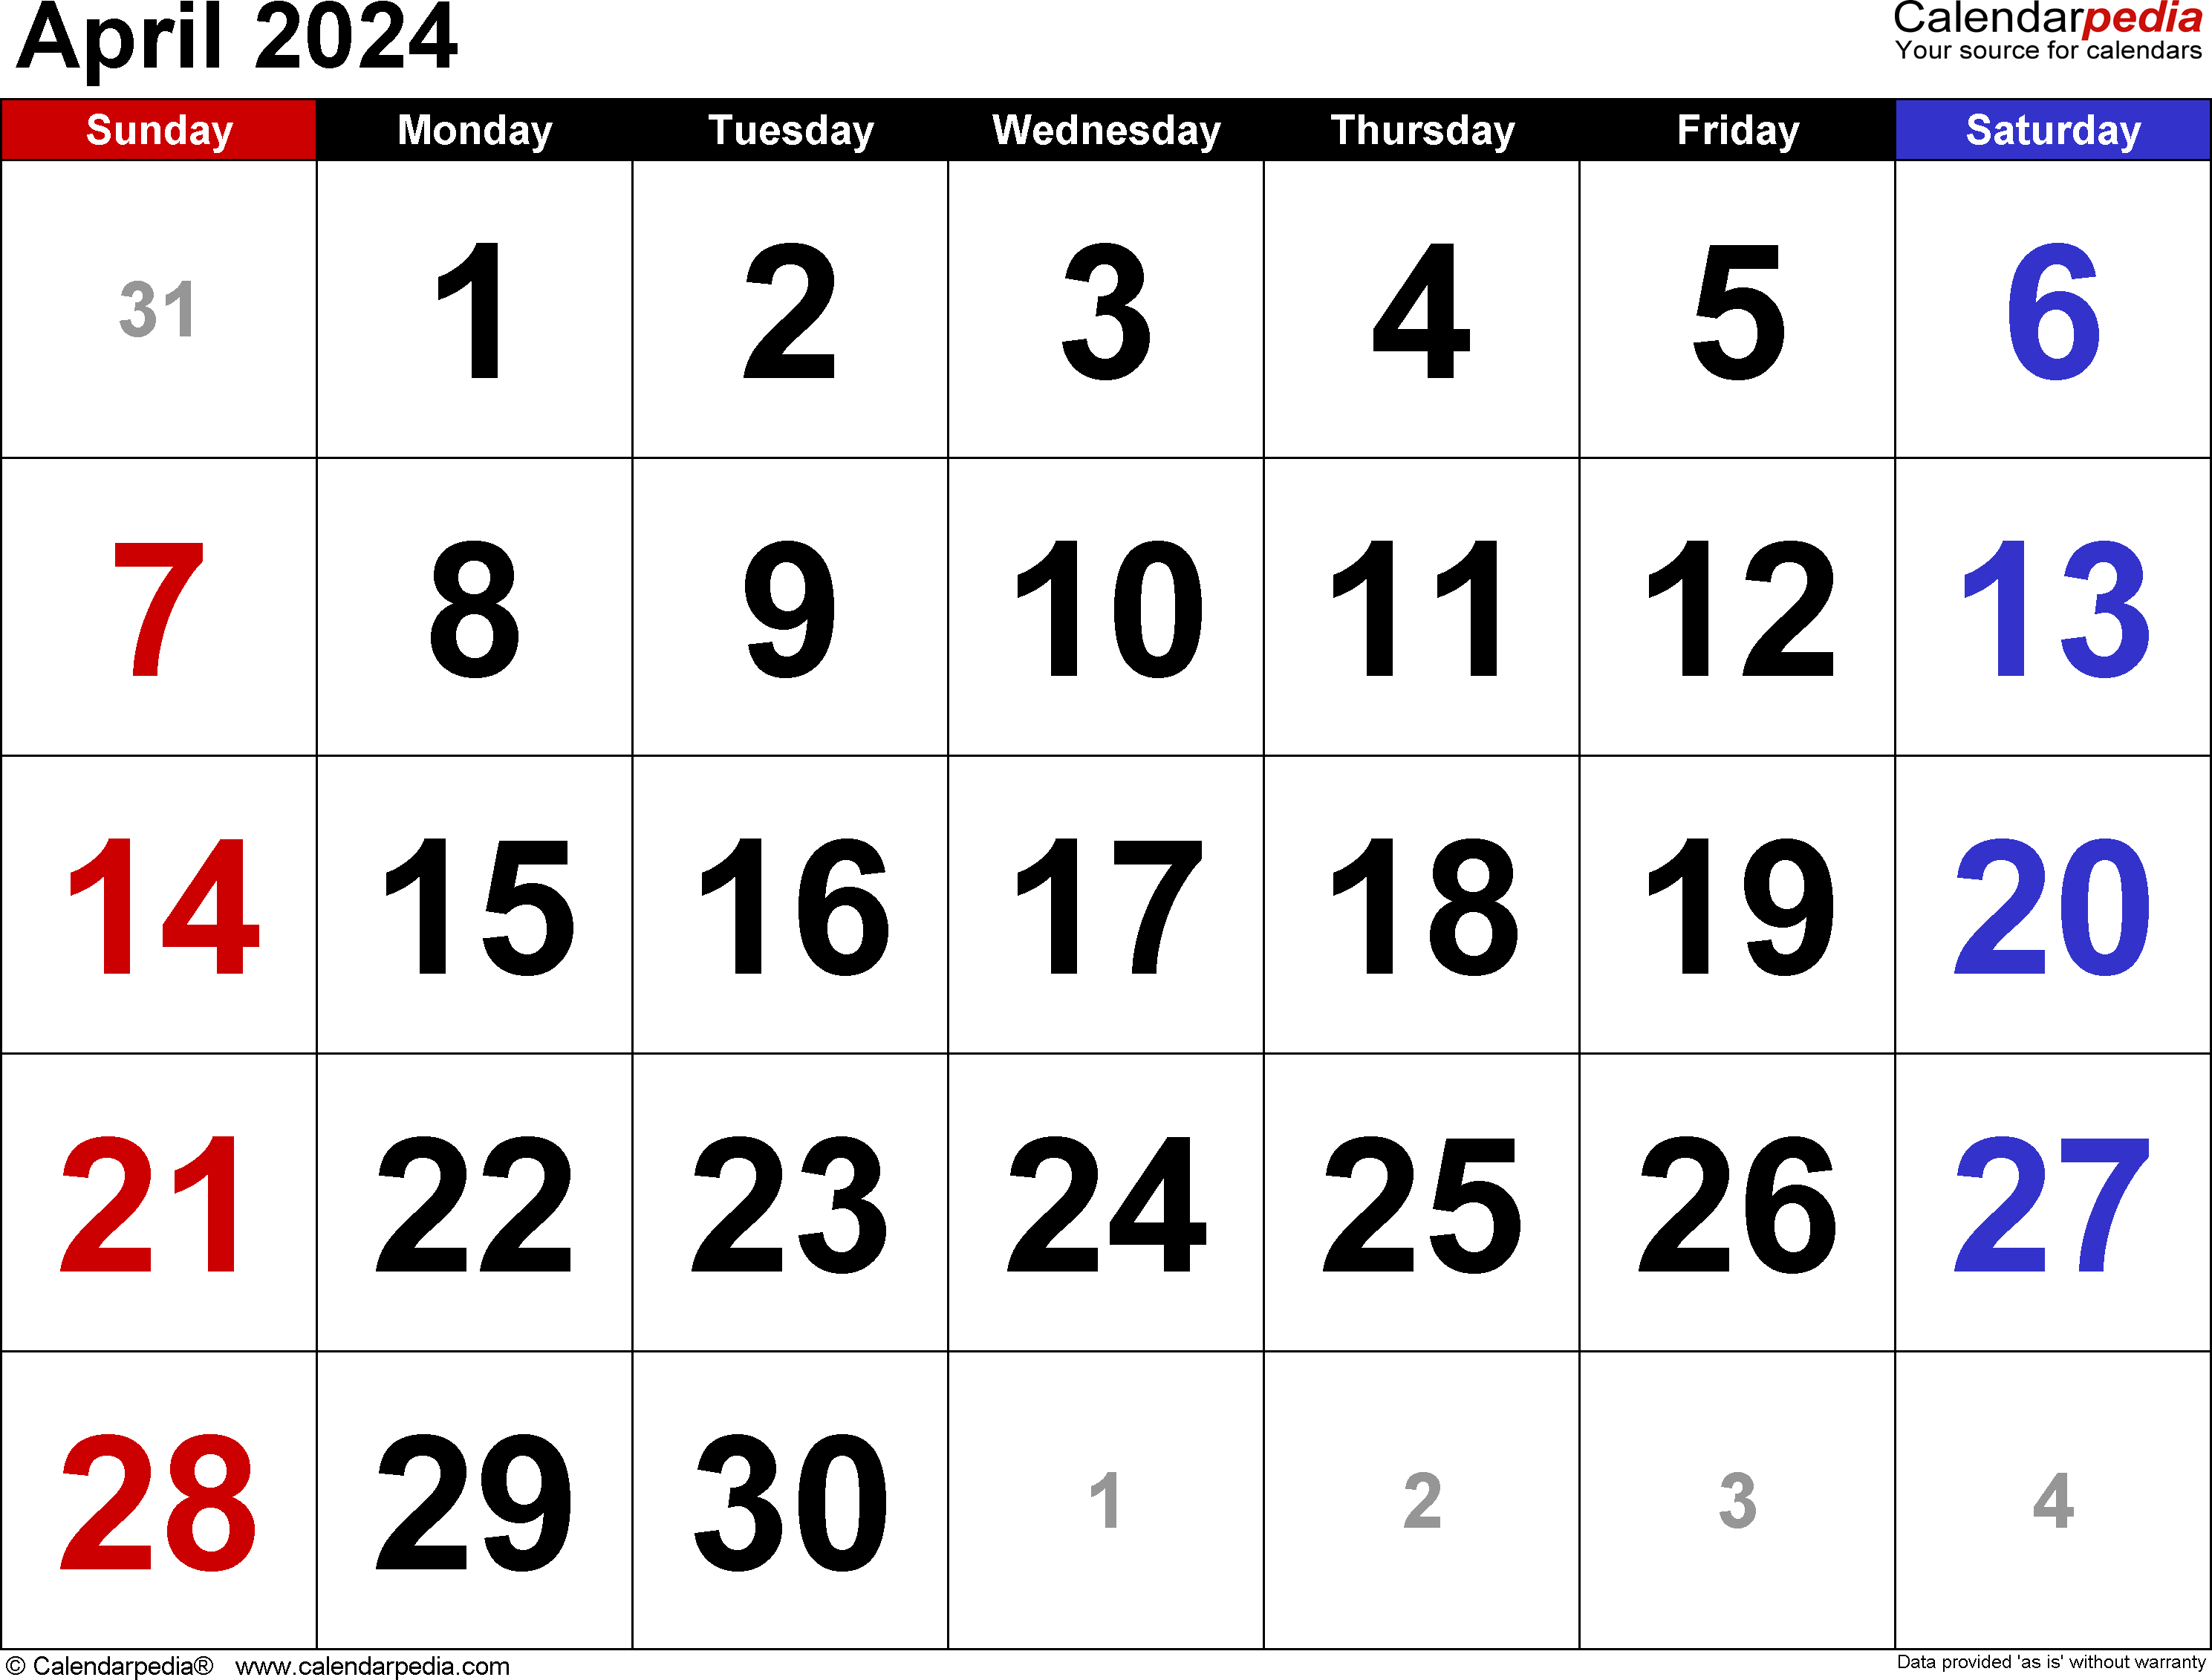 April 2024 Calendar | Templates For Word, Excel And Pdf regarding Calendar 2024 April Month